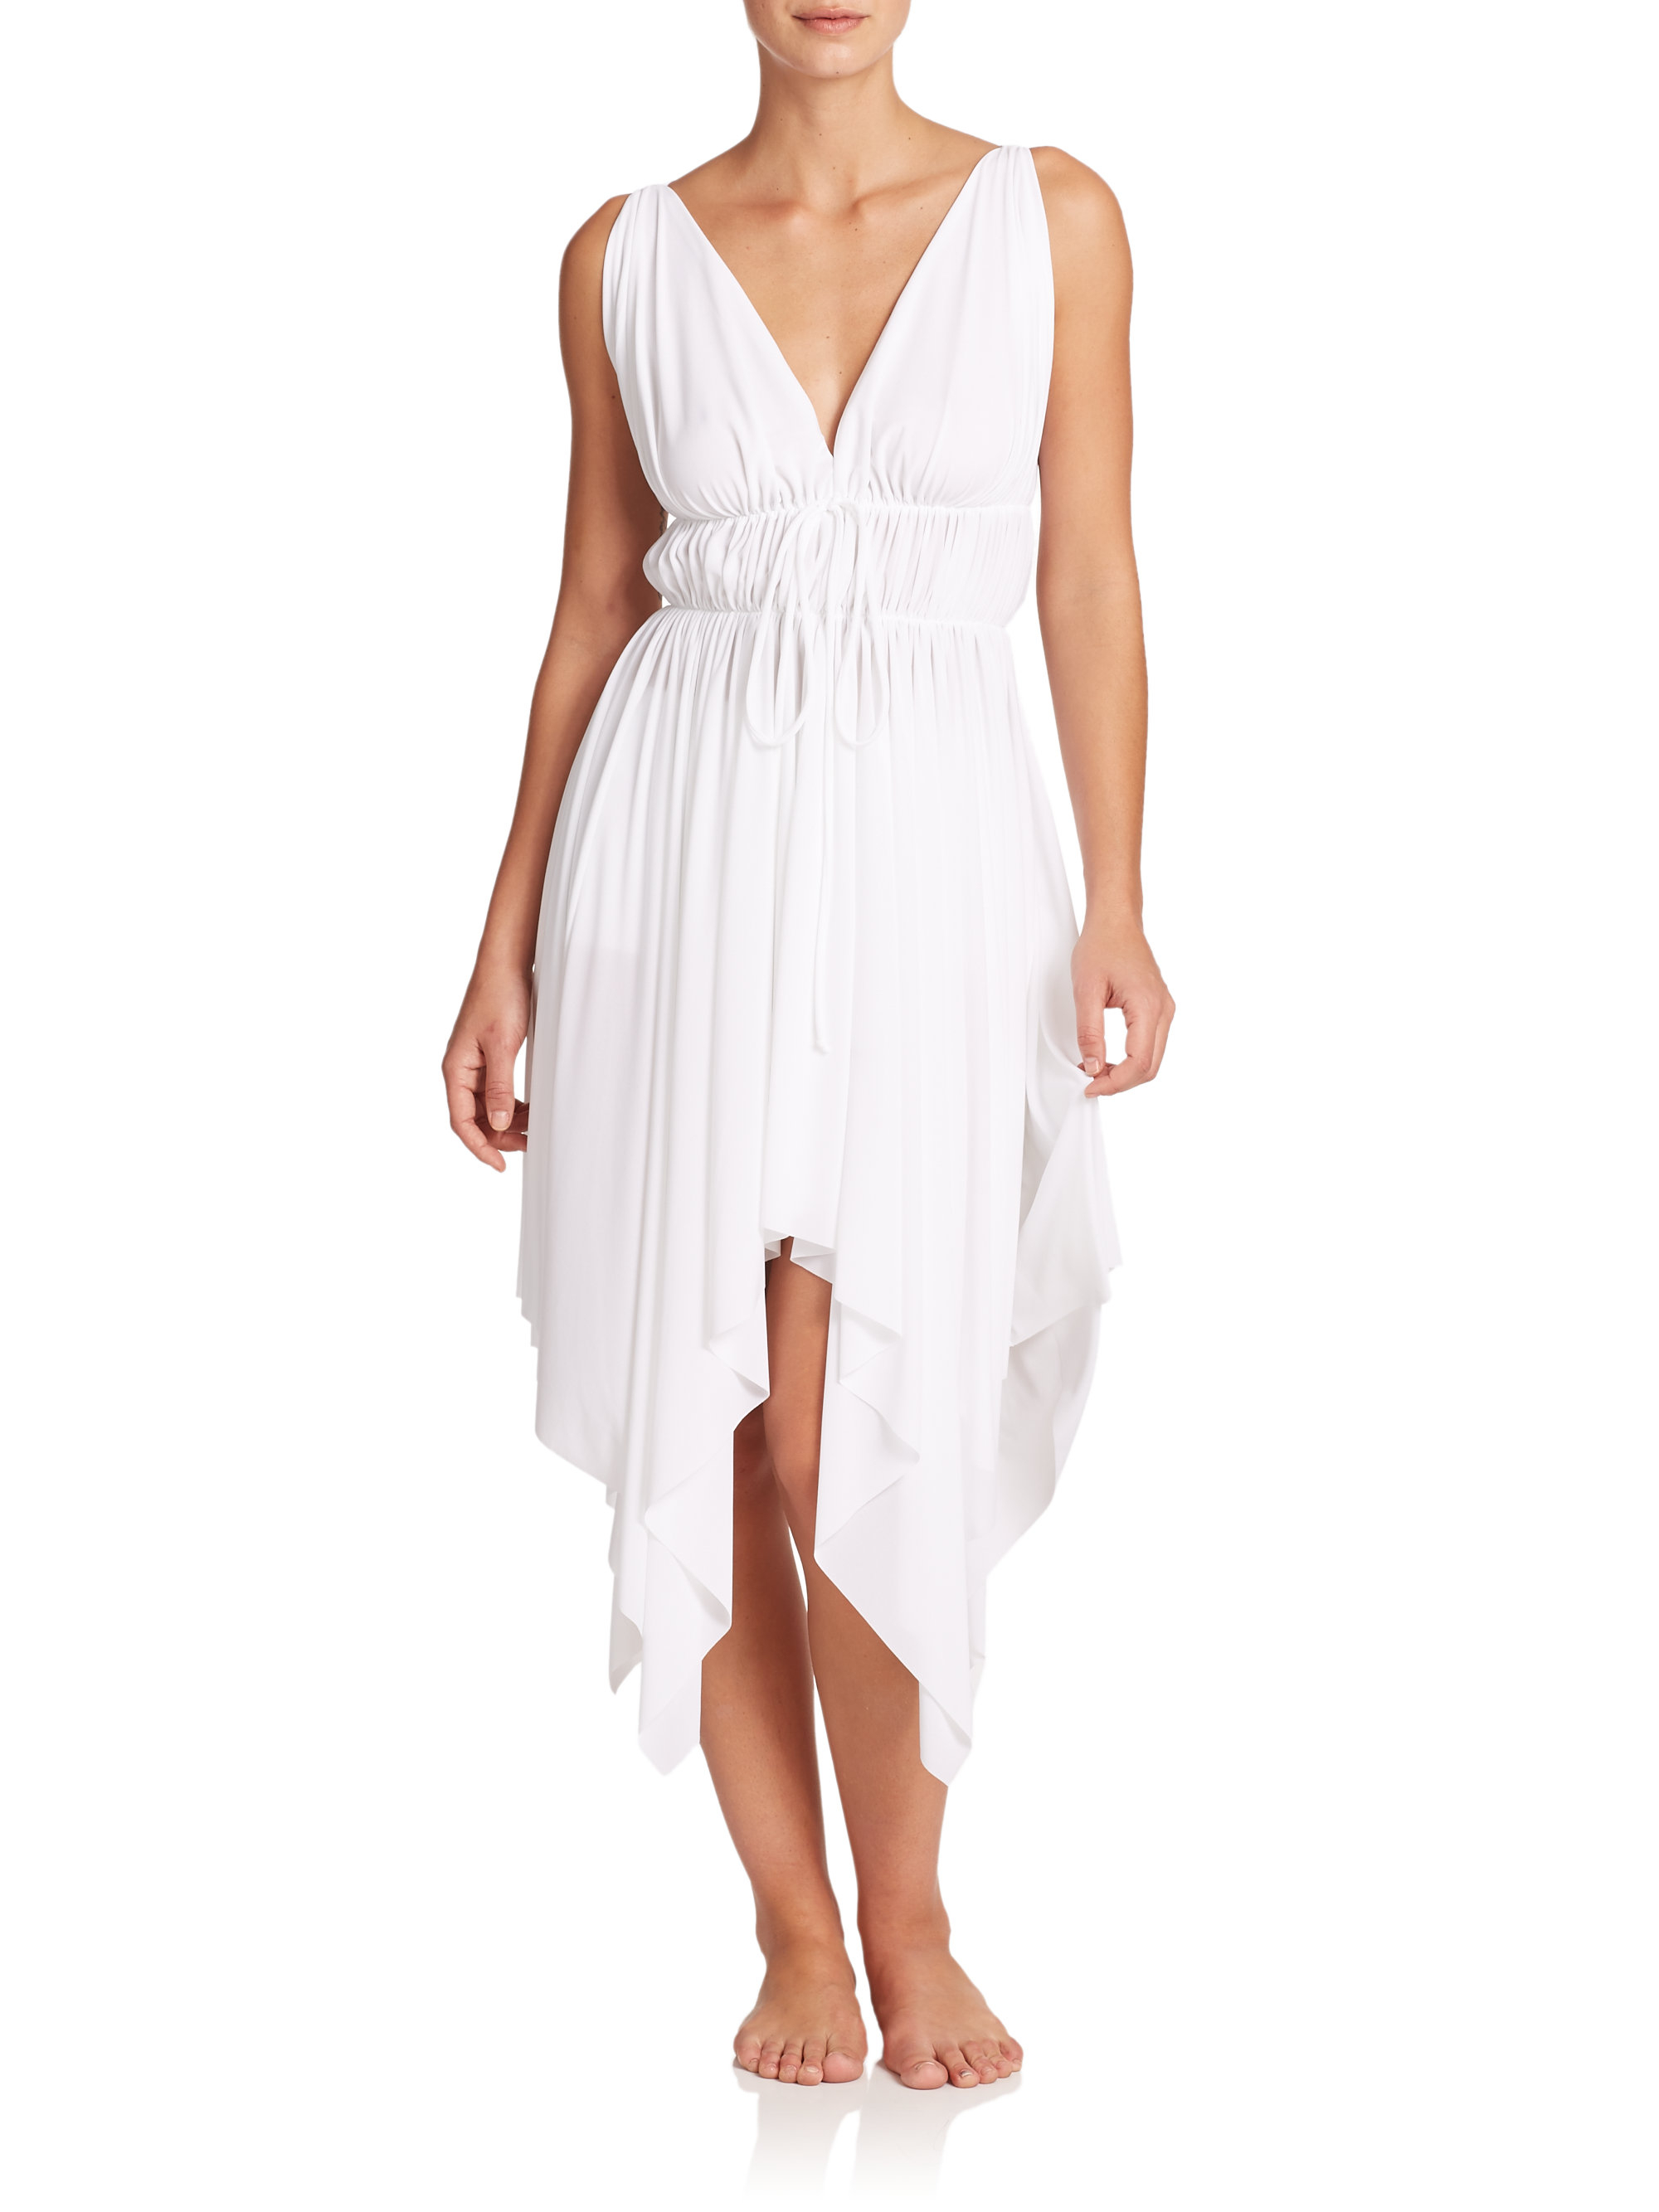 Norma kamali Goddess Asymmetrical Dress in White | Lyst